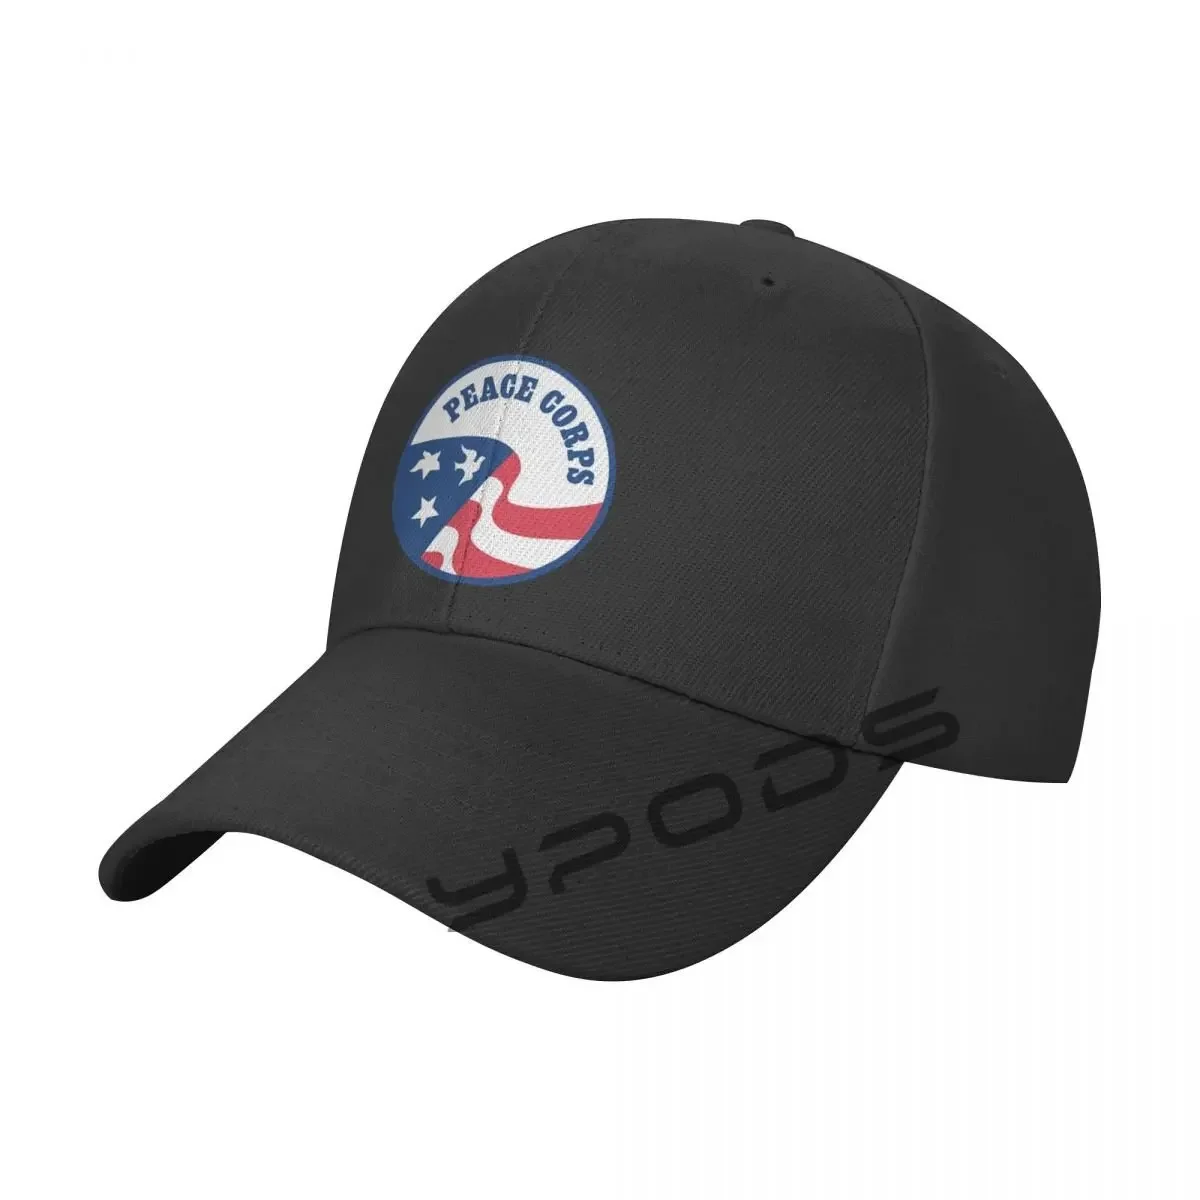 

Peace Corps Baseball Hats Cap For Men Women Adjustable Snapback Caps Dad Hat Hot